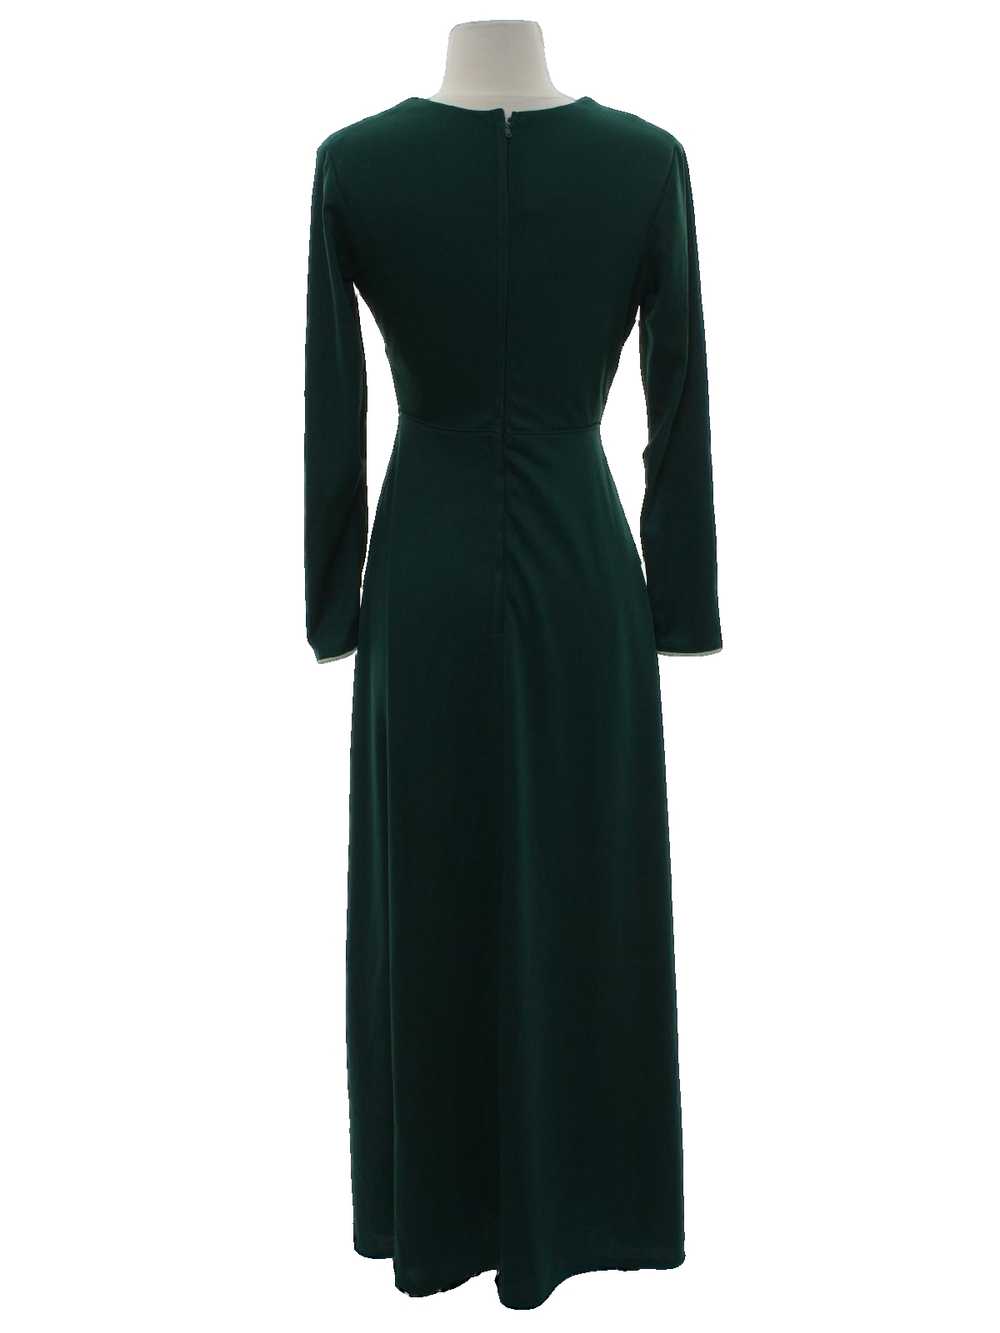 1960's Union label Maxi Dress - image 3